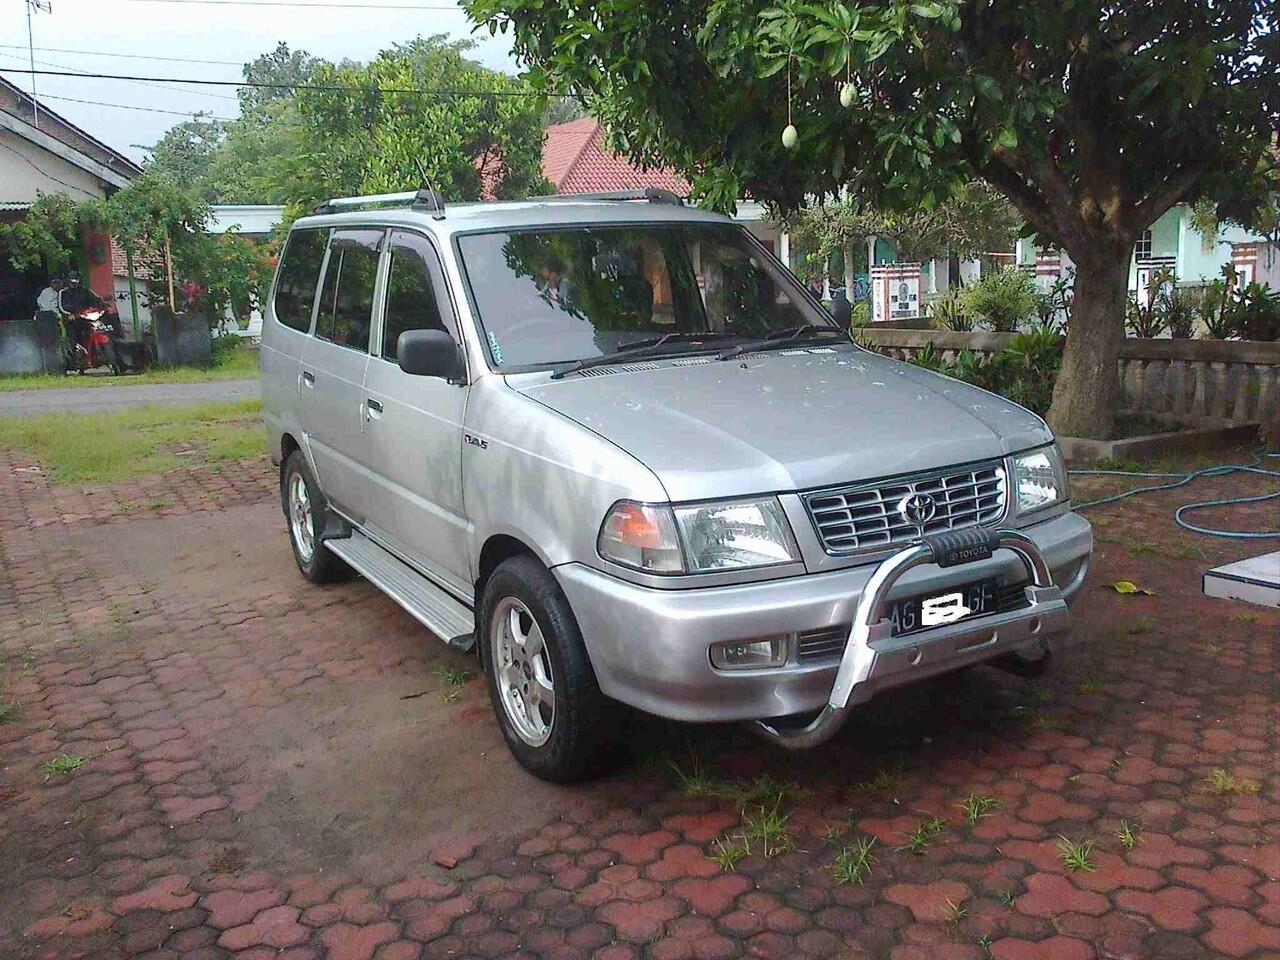 Cari Jual Mobil Bekas Toyota Kijang LX 2001 Kediri Jawa Timur